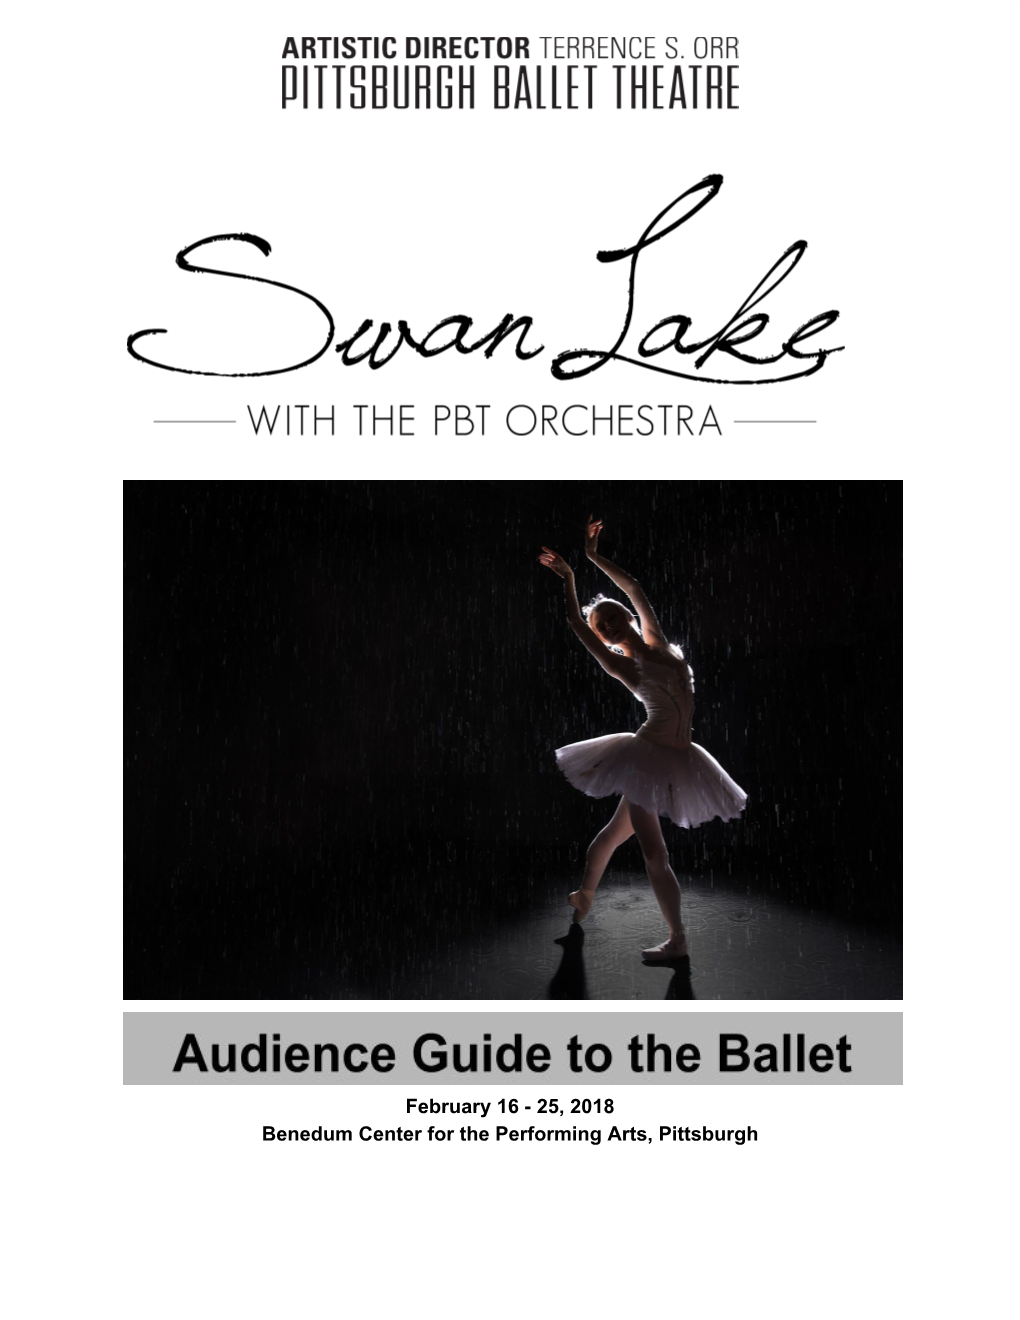 Swan Lake Audience Guide